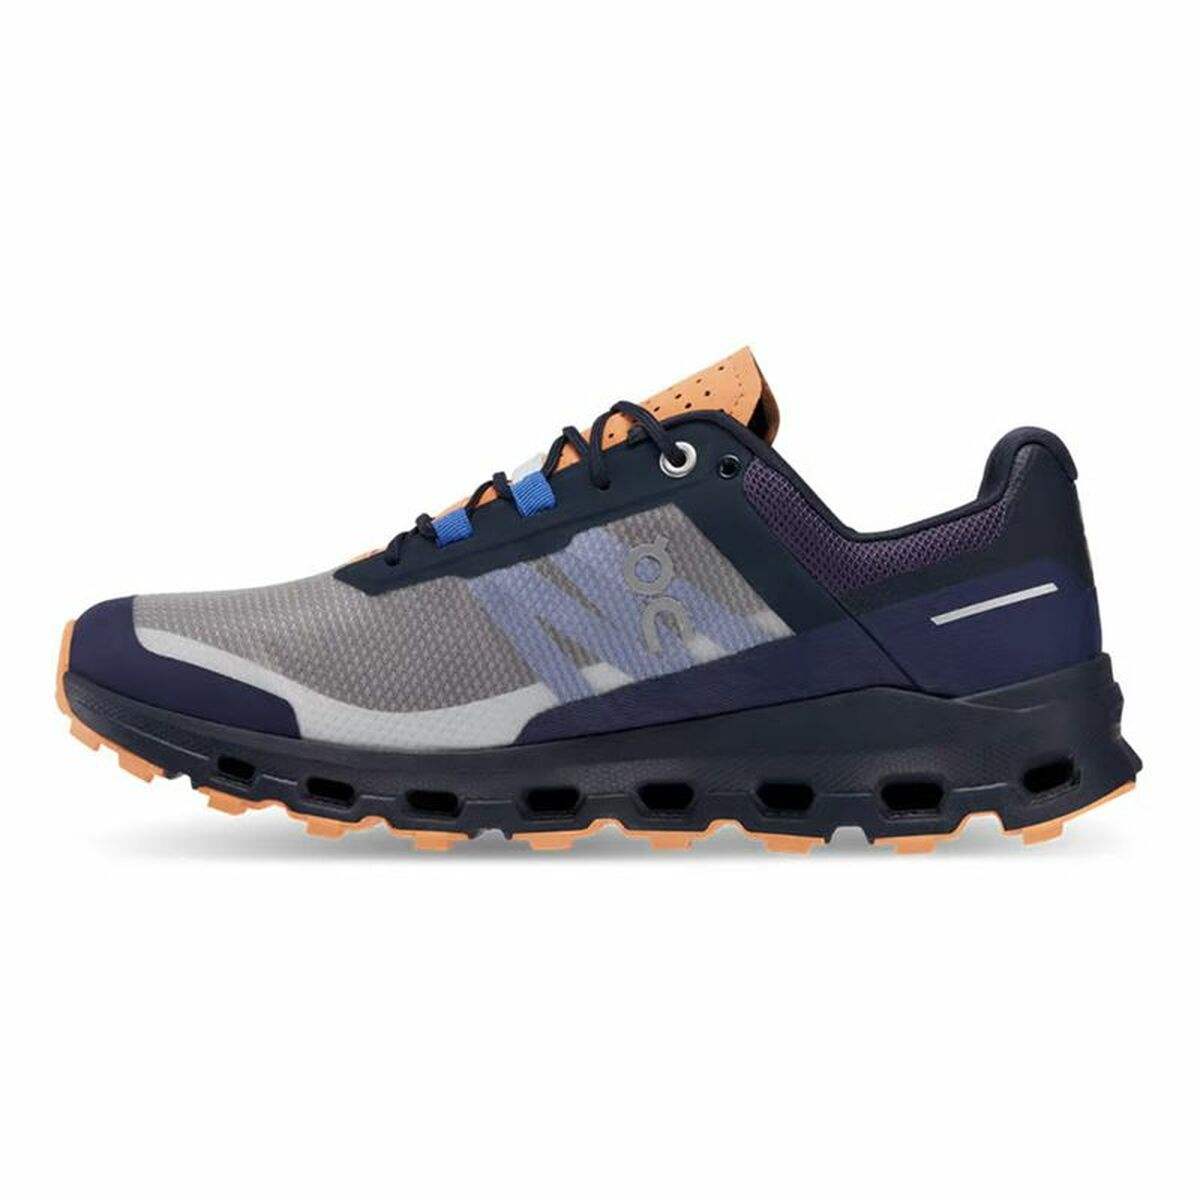 Chaussures de Running pour Adultes On Running Cloudvista Homme Blue marine - On Running - Jardin D'Eyden - jardindeyden.fr